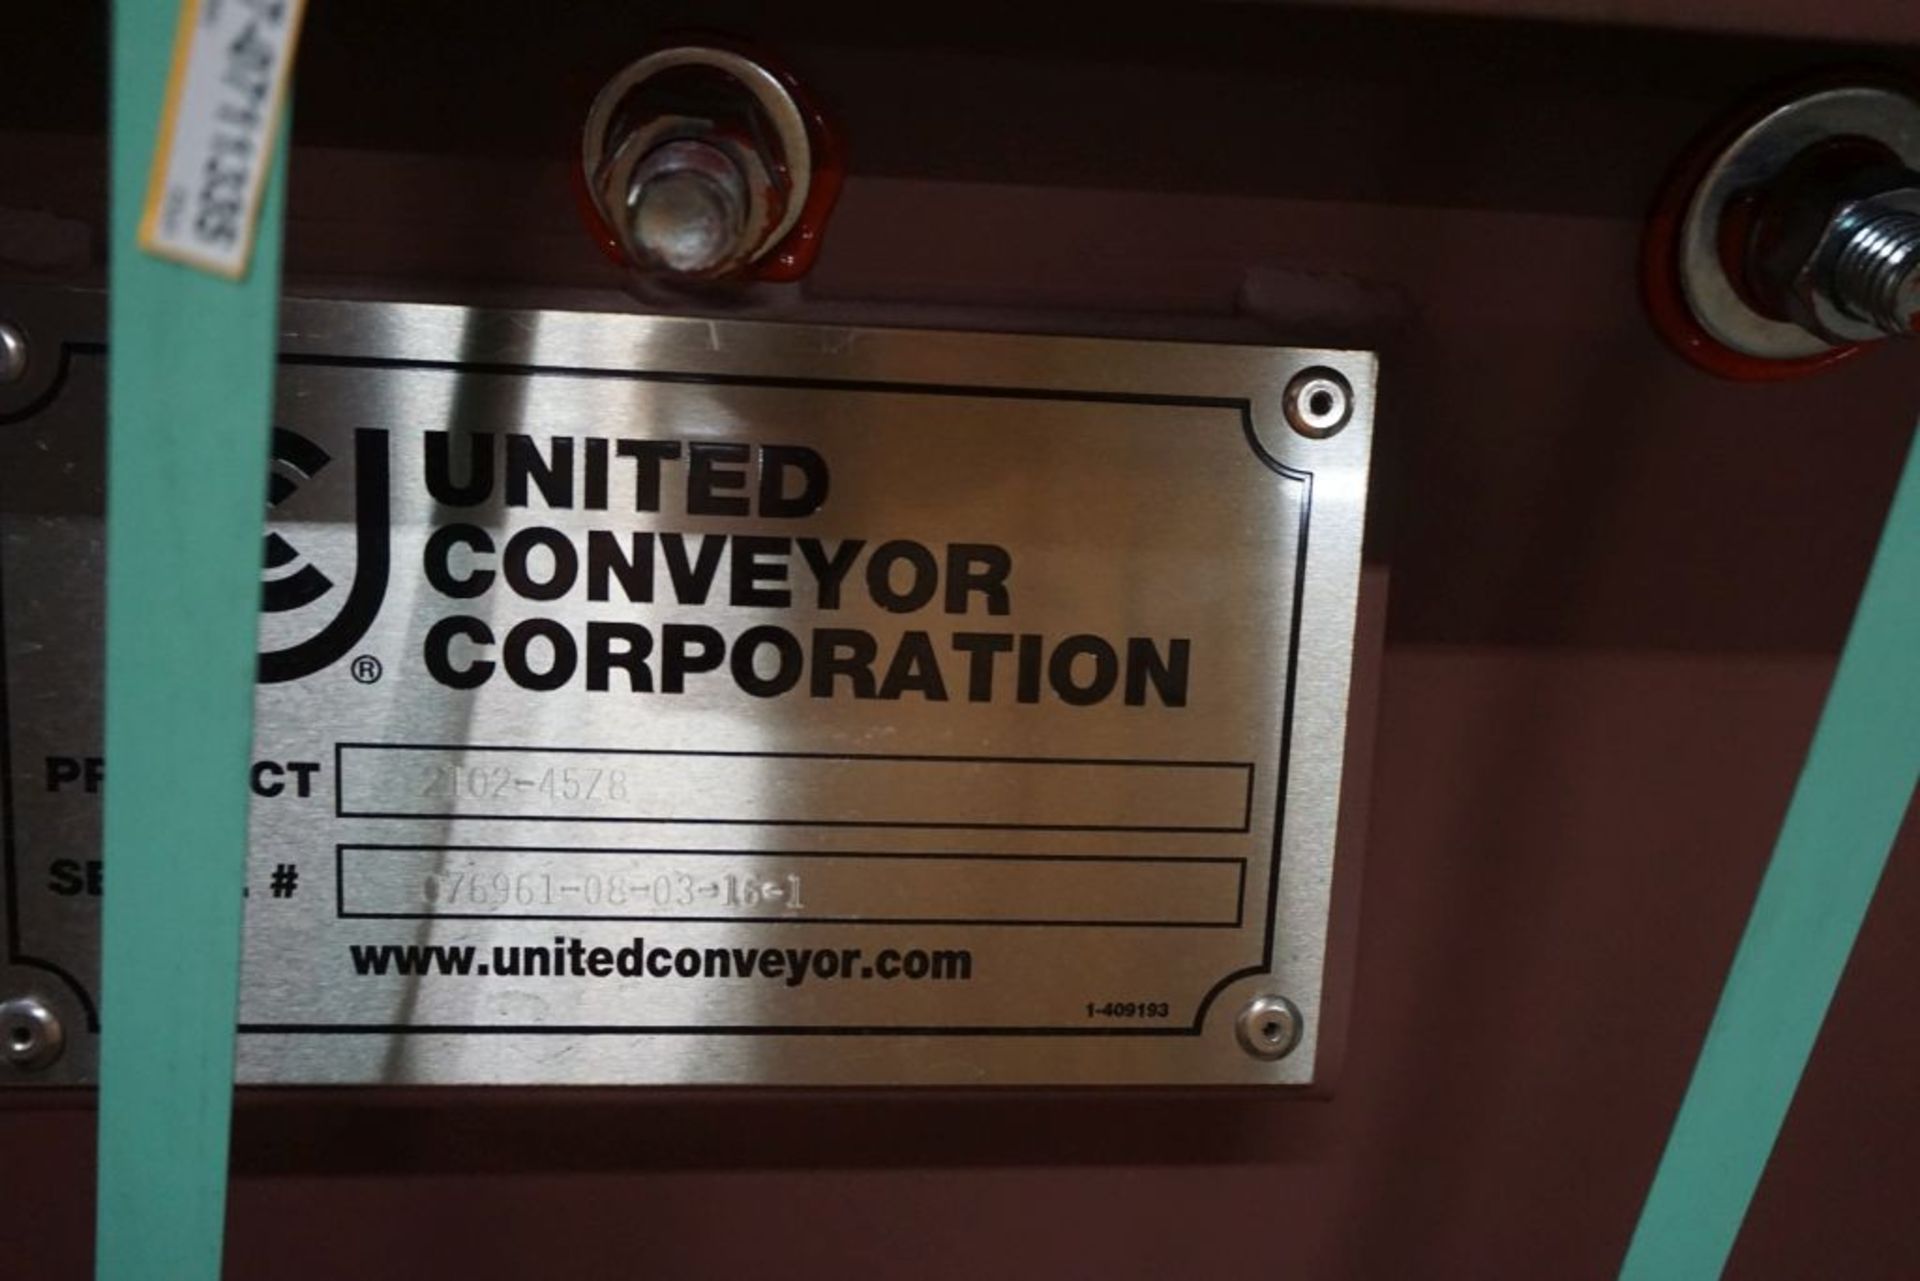 United Conveyor Corporation Excen-Crusher|Model No. 2102-45Z8; Size: 27 x 20; New Style w/o Sprocket - Image 9 of 10